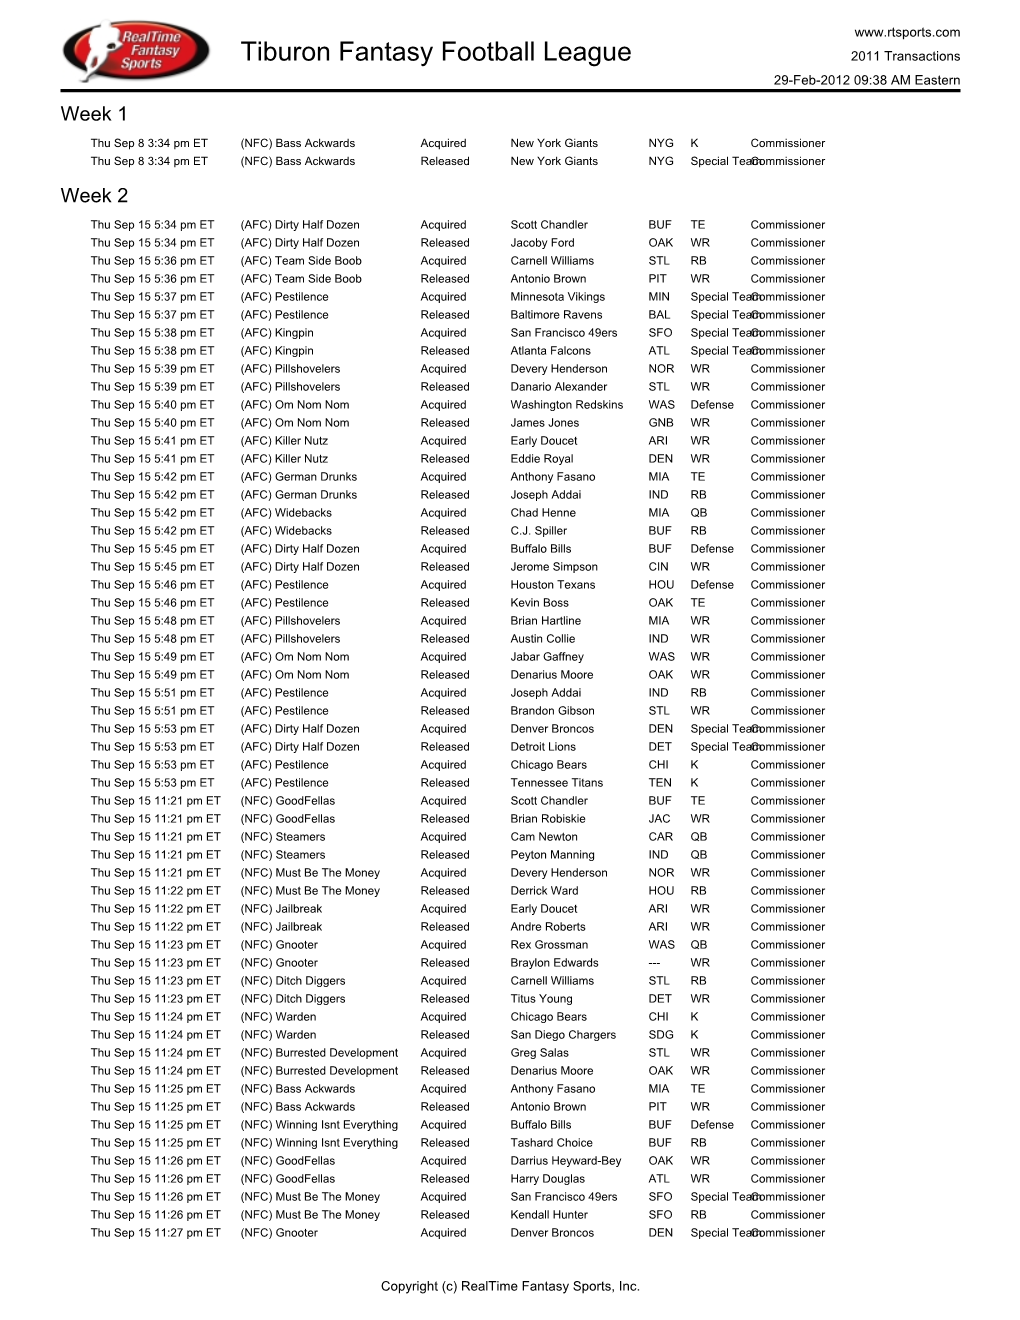 Tiburon Fantasy Football League 2011 Transactions 29-Feb-2012 09:38 AM Eastern Week 1